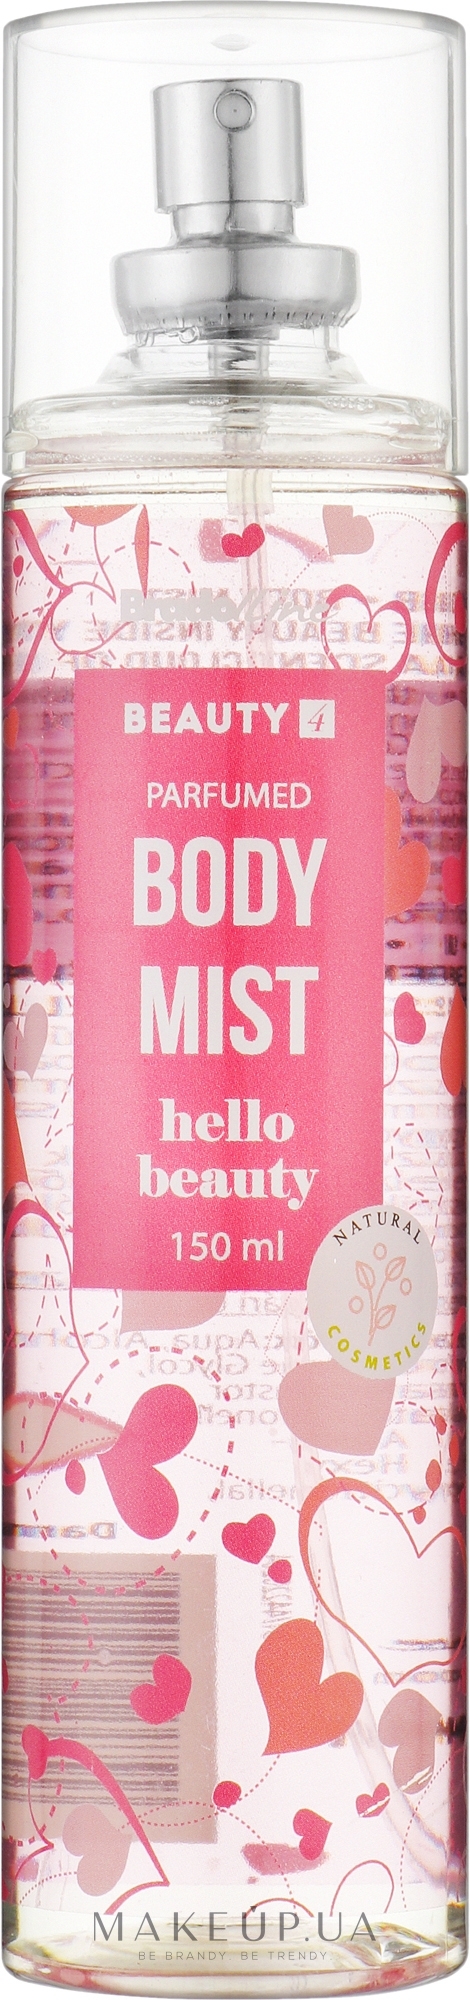 Мист для тела "Hello Beauty" - Bradoline Beauty 4 Body Mist  — фото 150ml